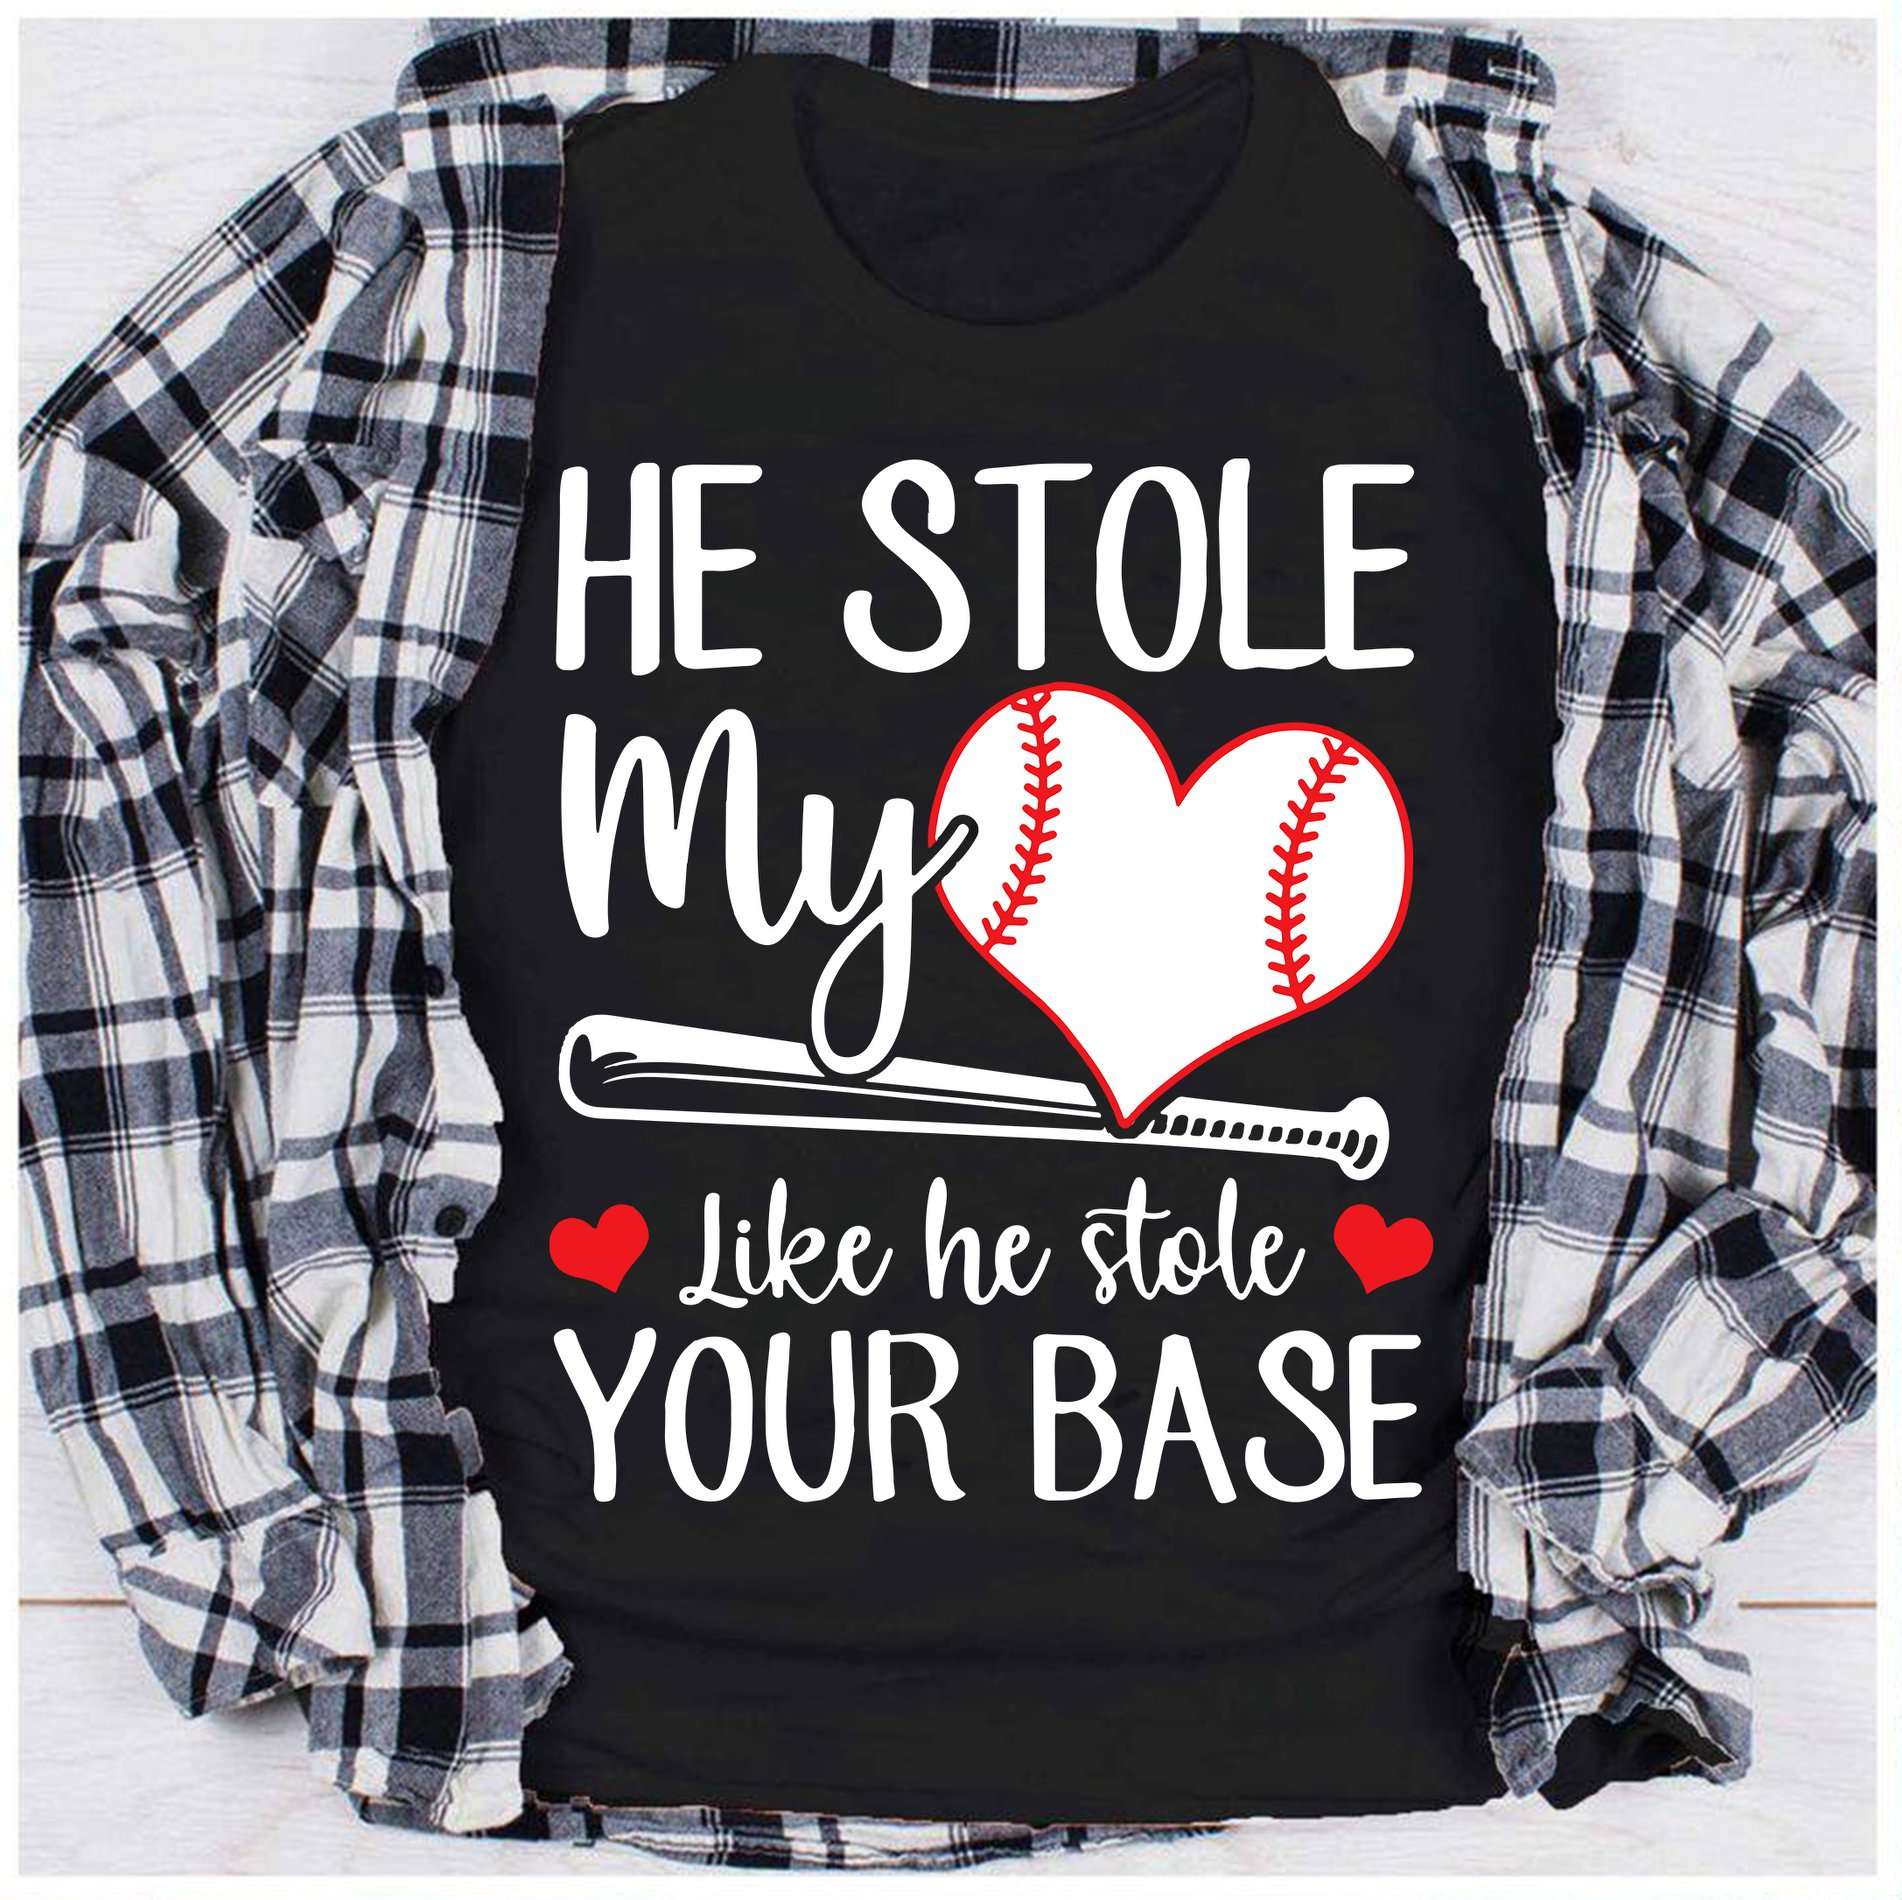 He stole my heart like he stole your base - Baseball player, love playing baseball